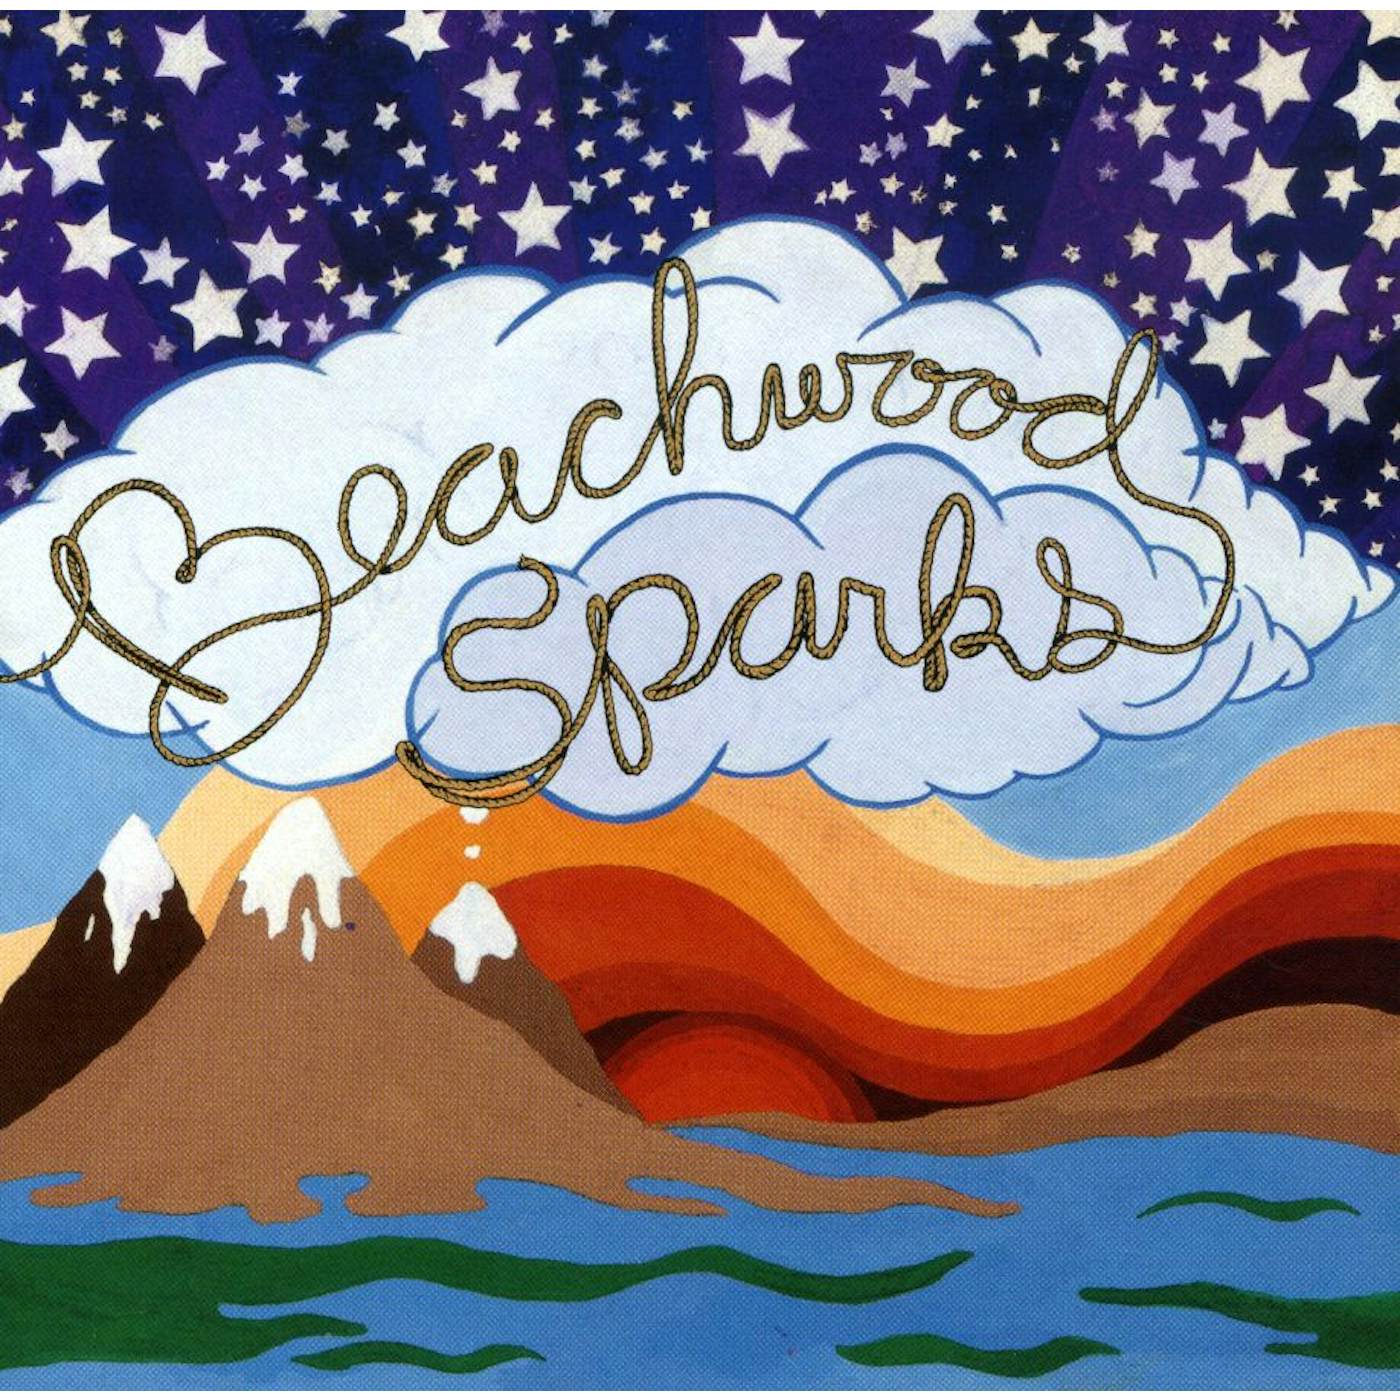 BEACHWOOD SPARKS CD